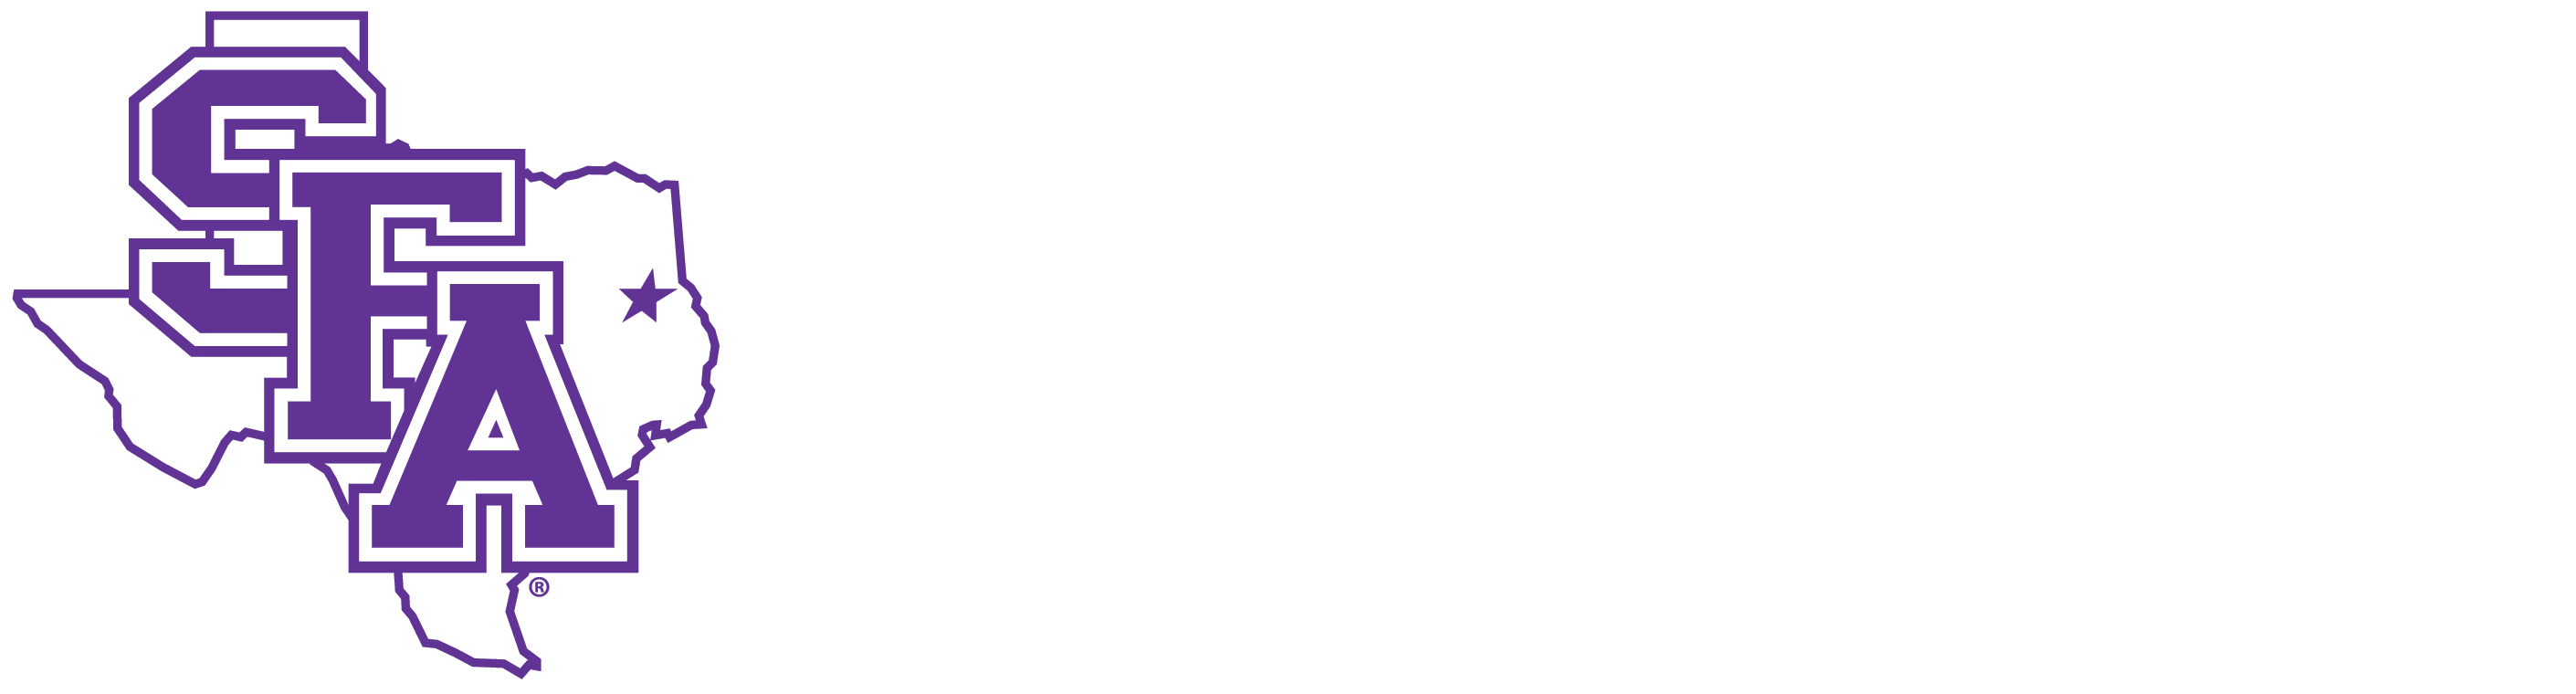 to Stephen F. Austin State University main web site